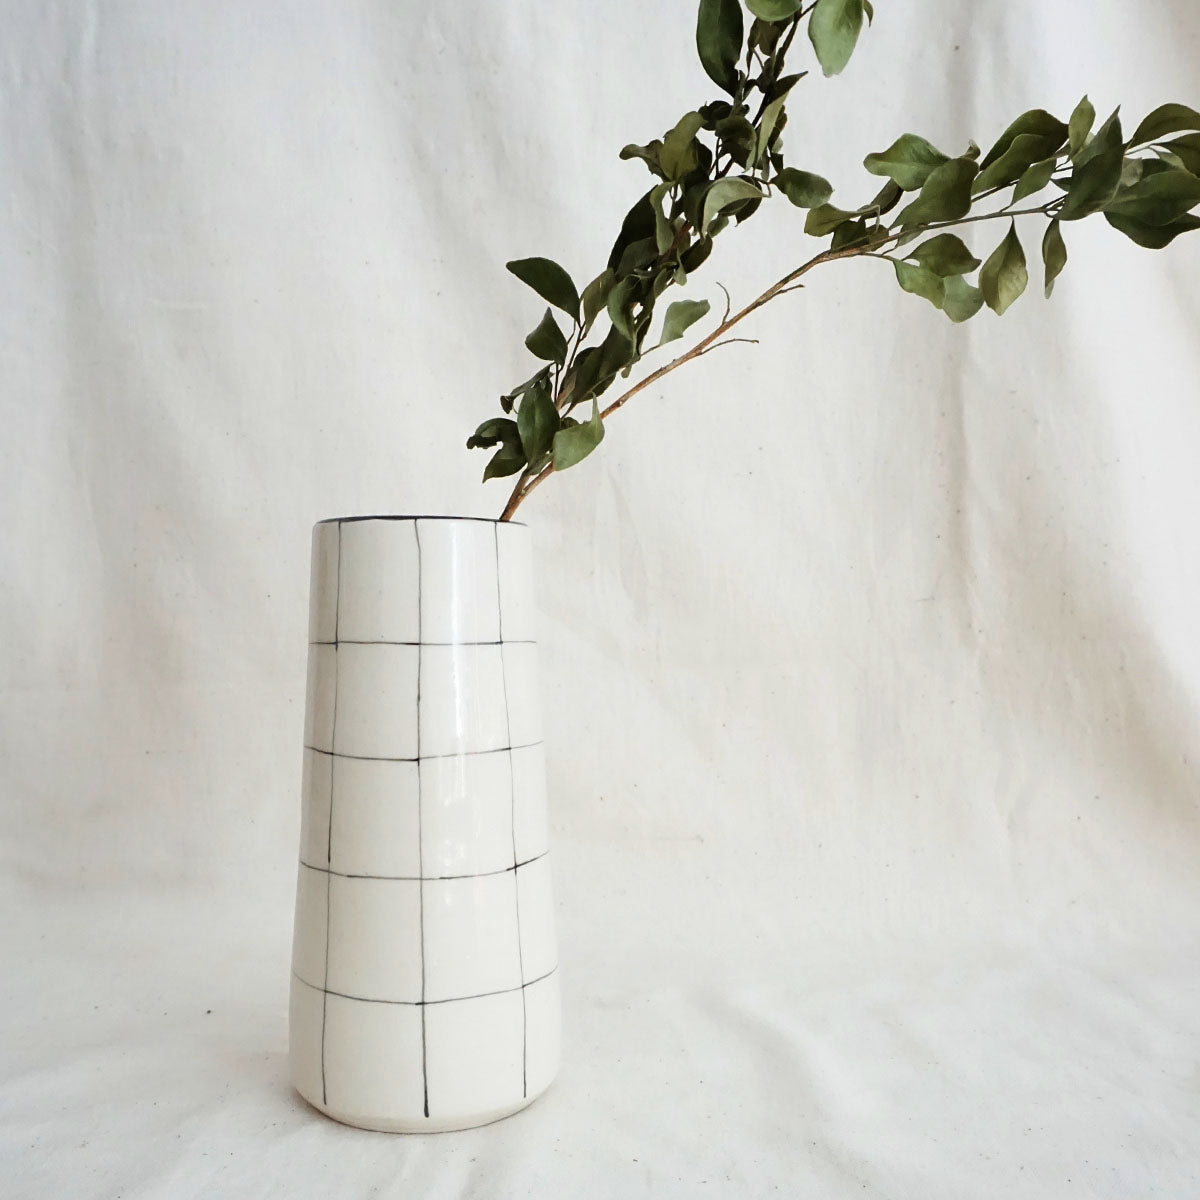 Chauko Flower Vase